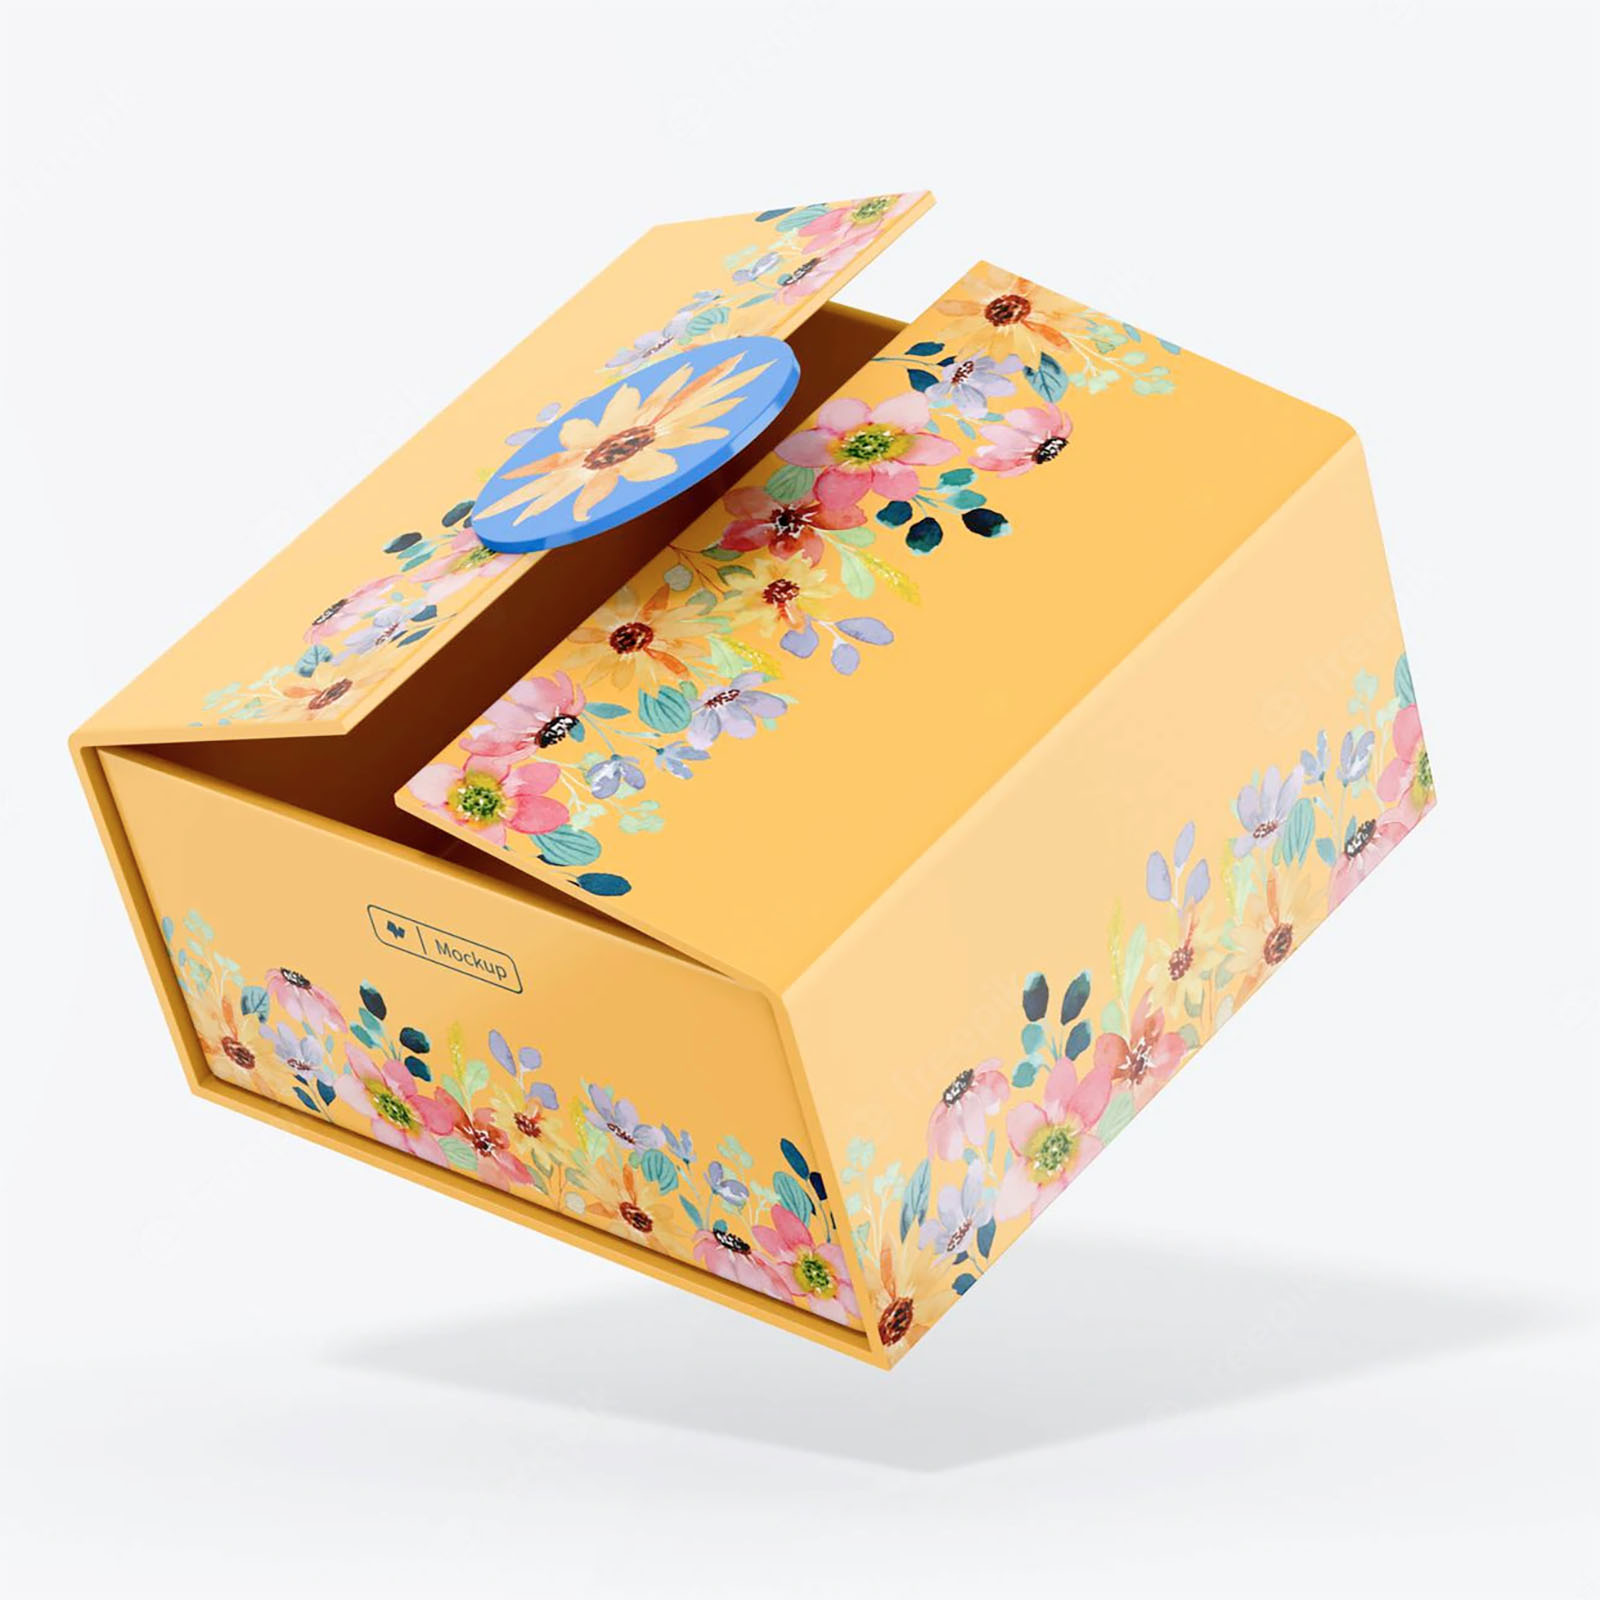 Custom Printed Magnetic Gift Box